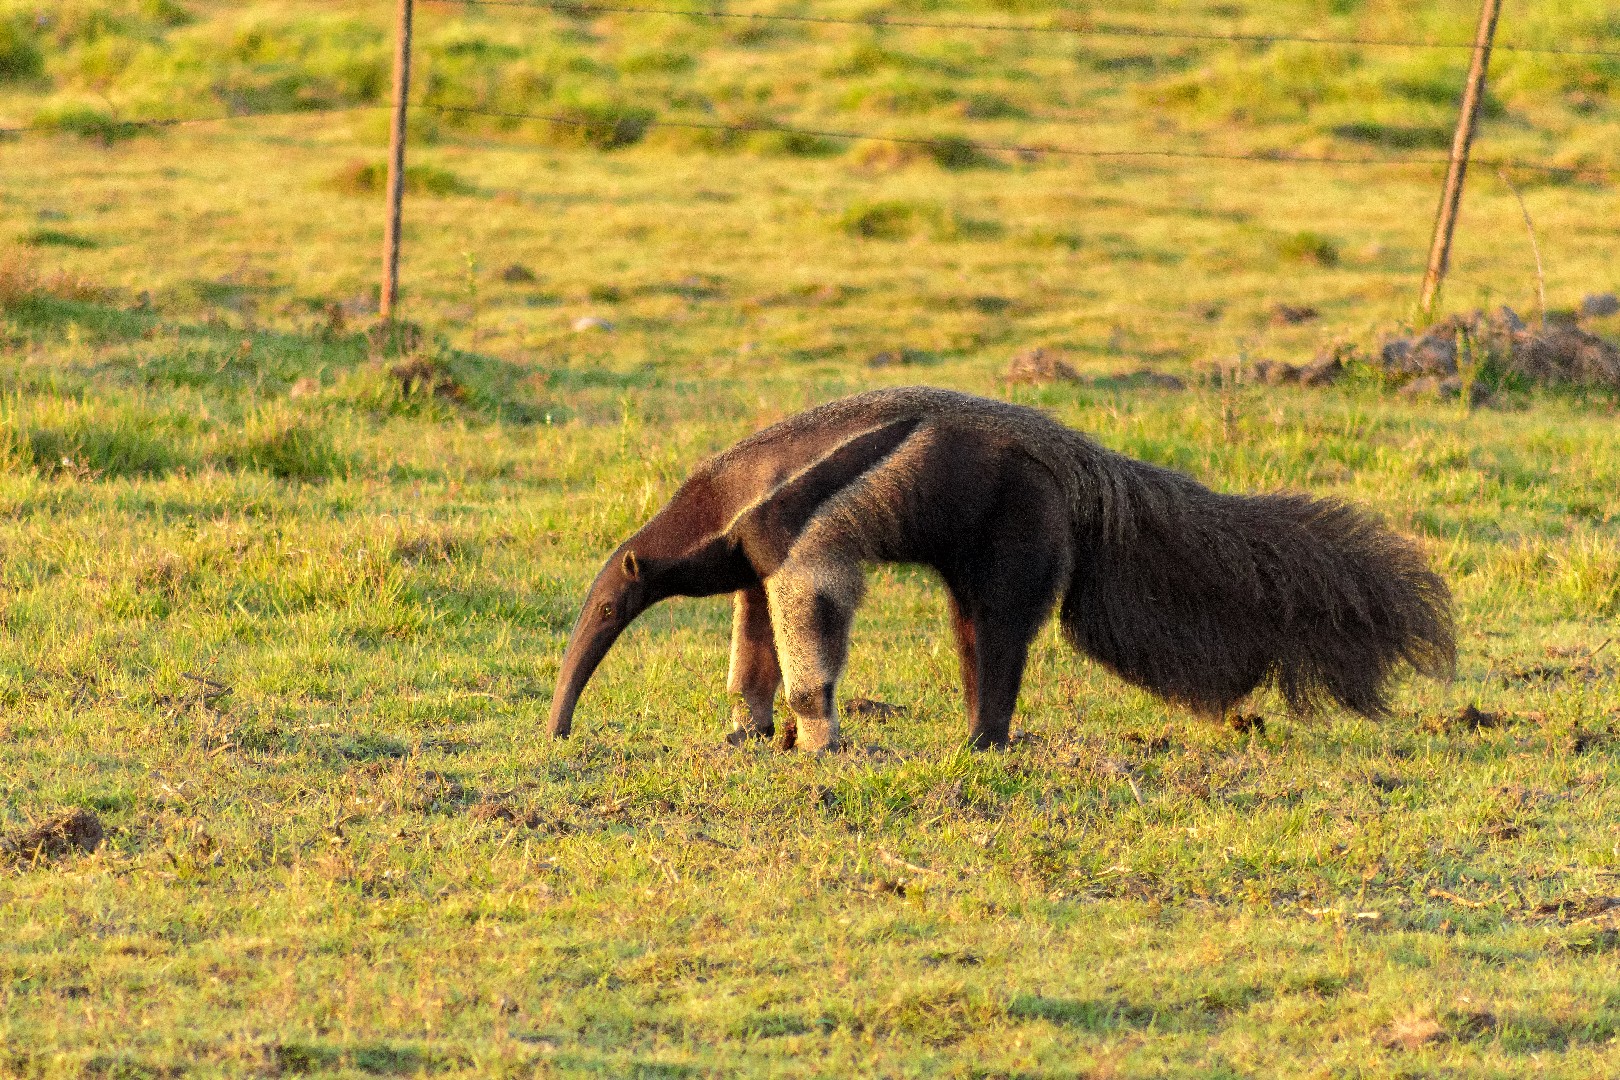 Giant anteaters (Myrmecophaga)